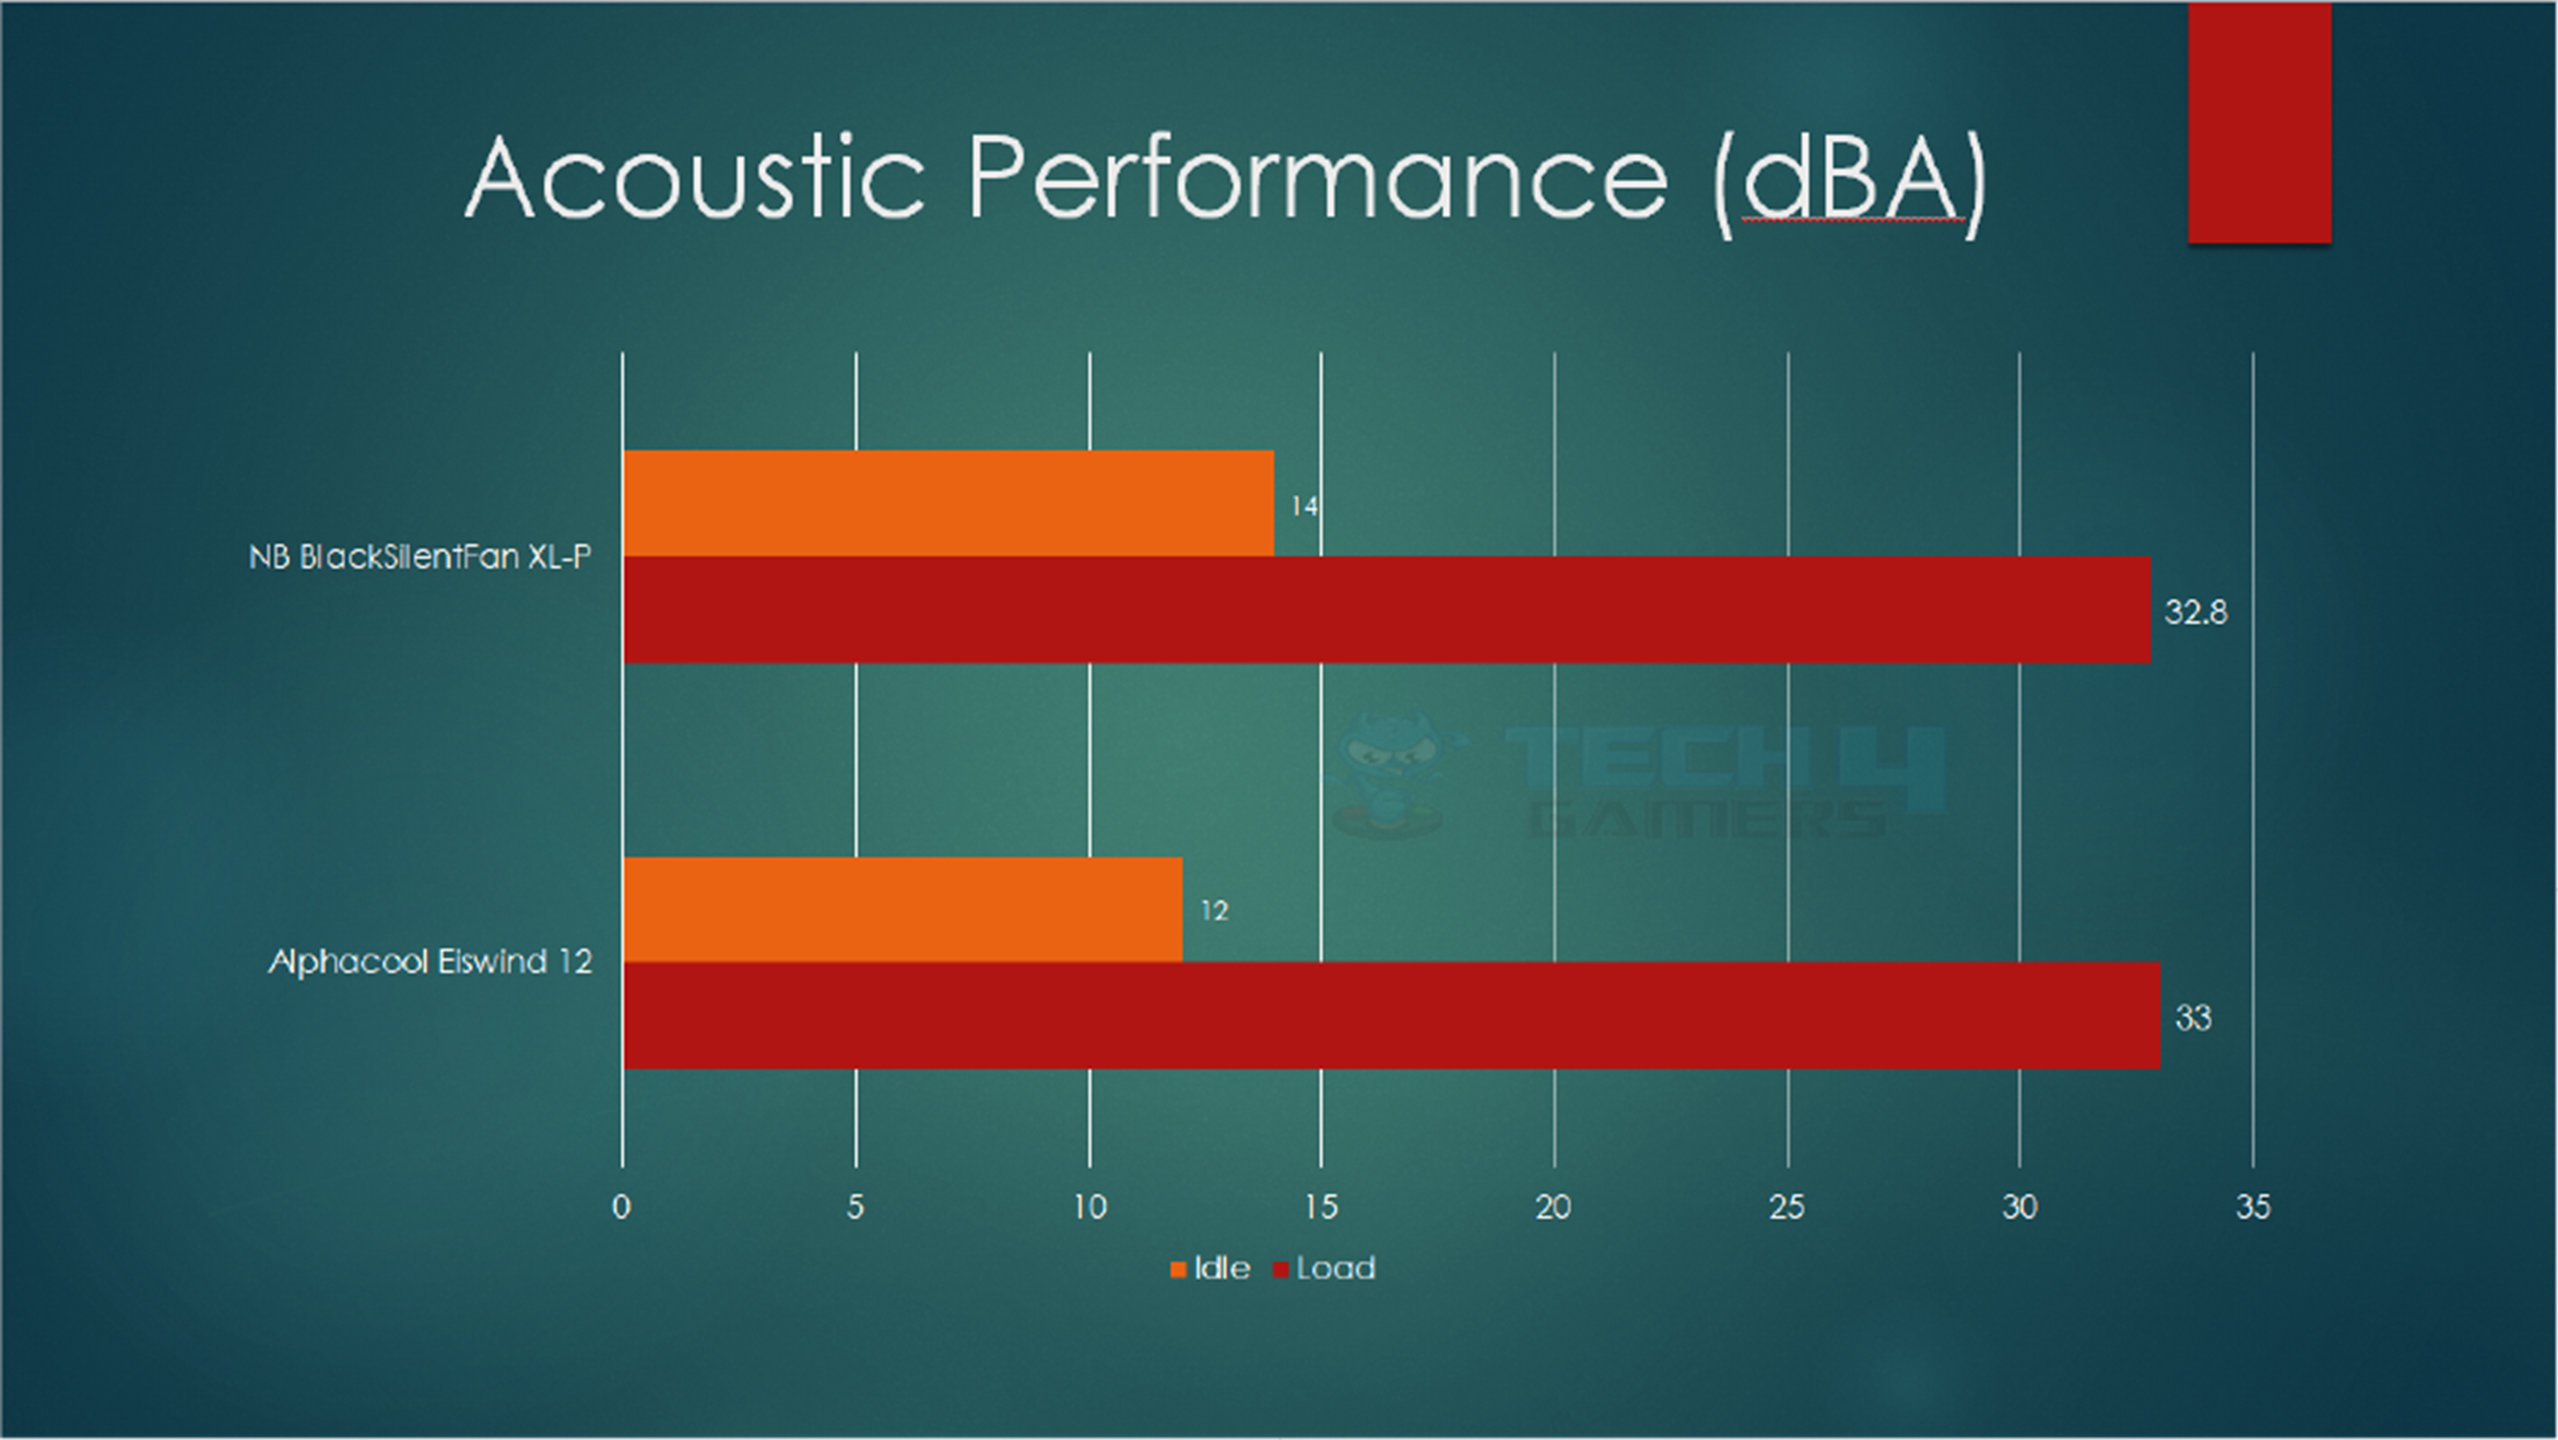 NB-BlackSilentFan XL-P Acoustic Performance 